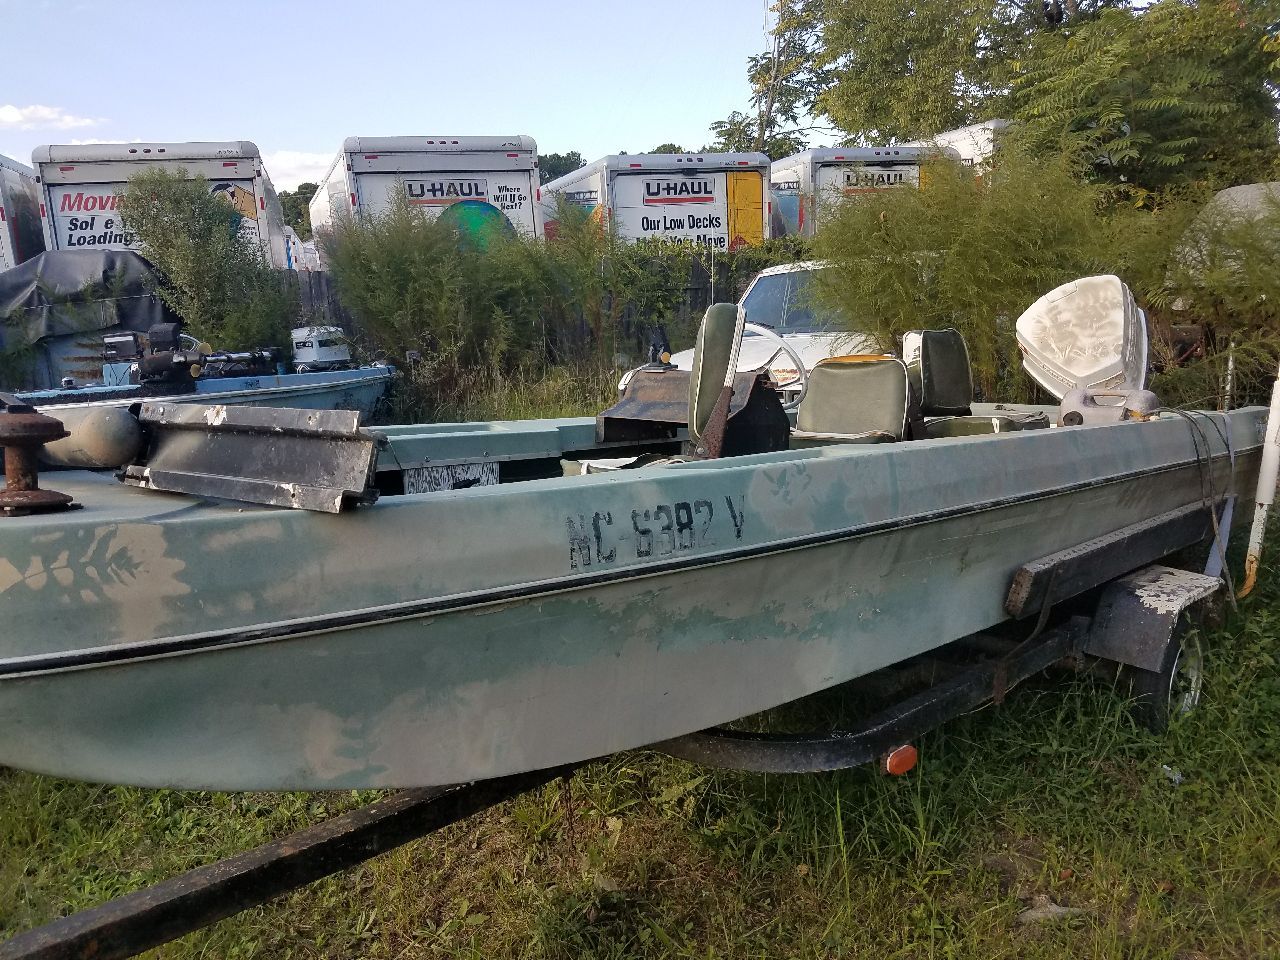 16 ft fiberglass bass boat. NEEDS WORK. Tailer needs tires. Need gone